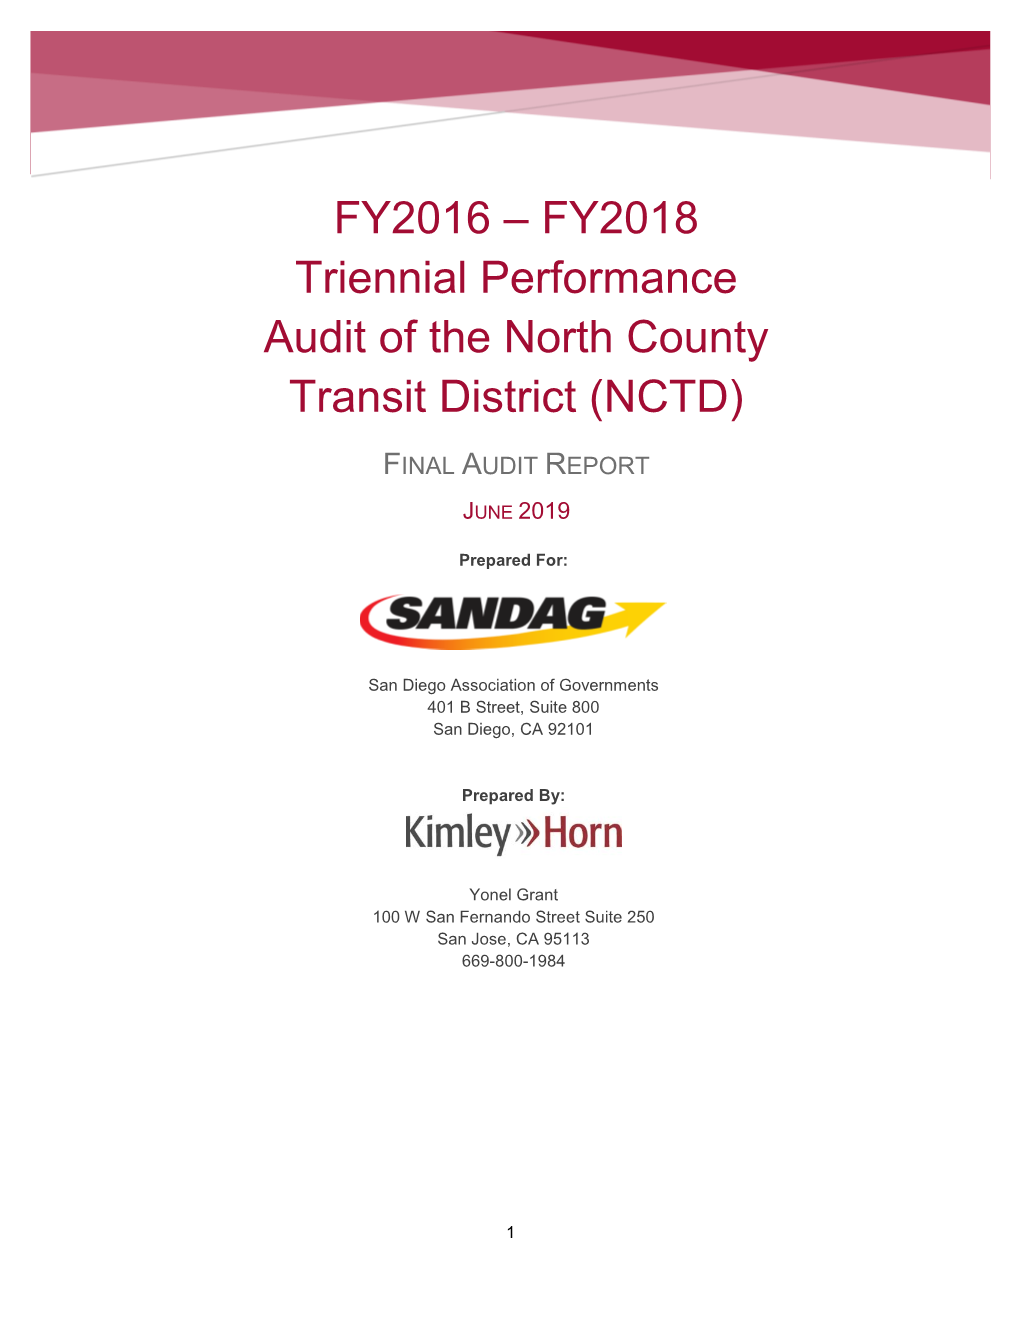 FY16-18 NCTD TDA Triennial Audit Final Report